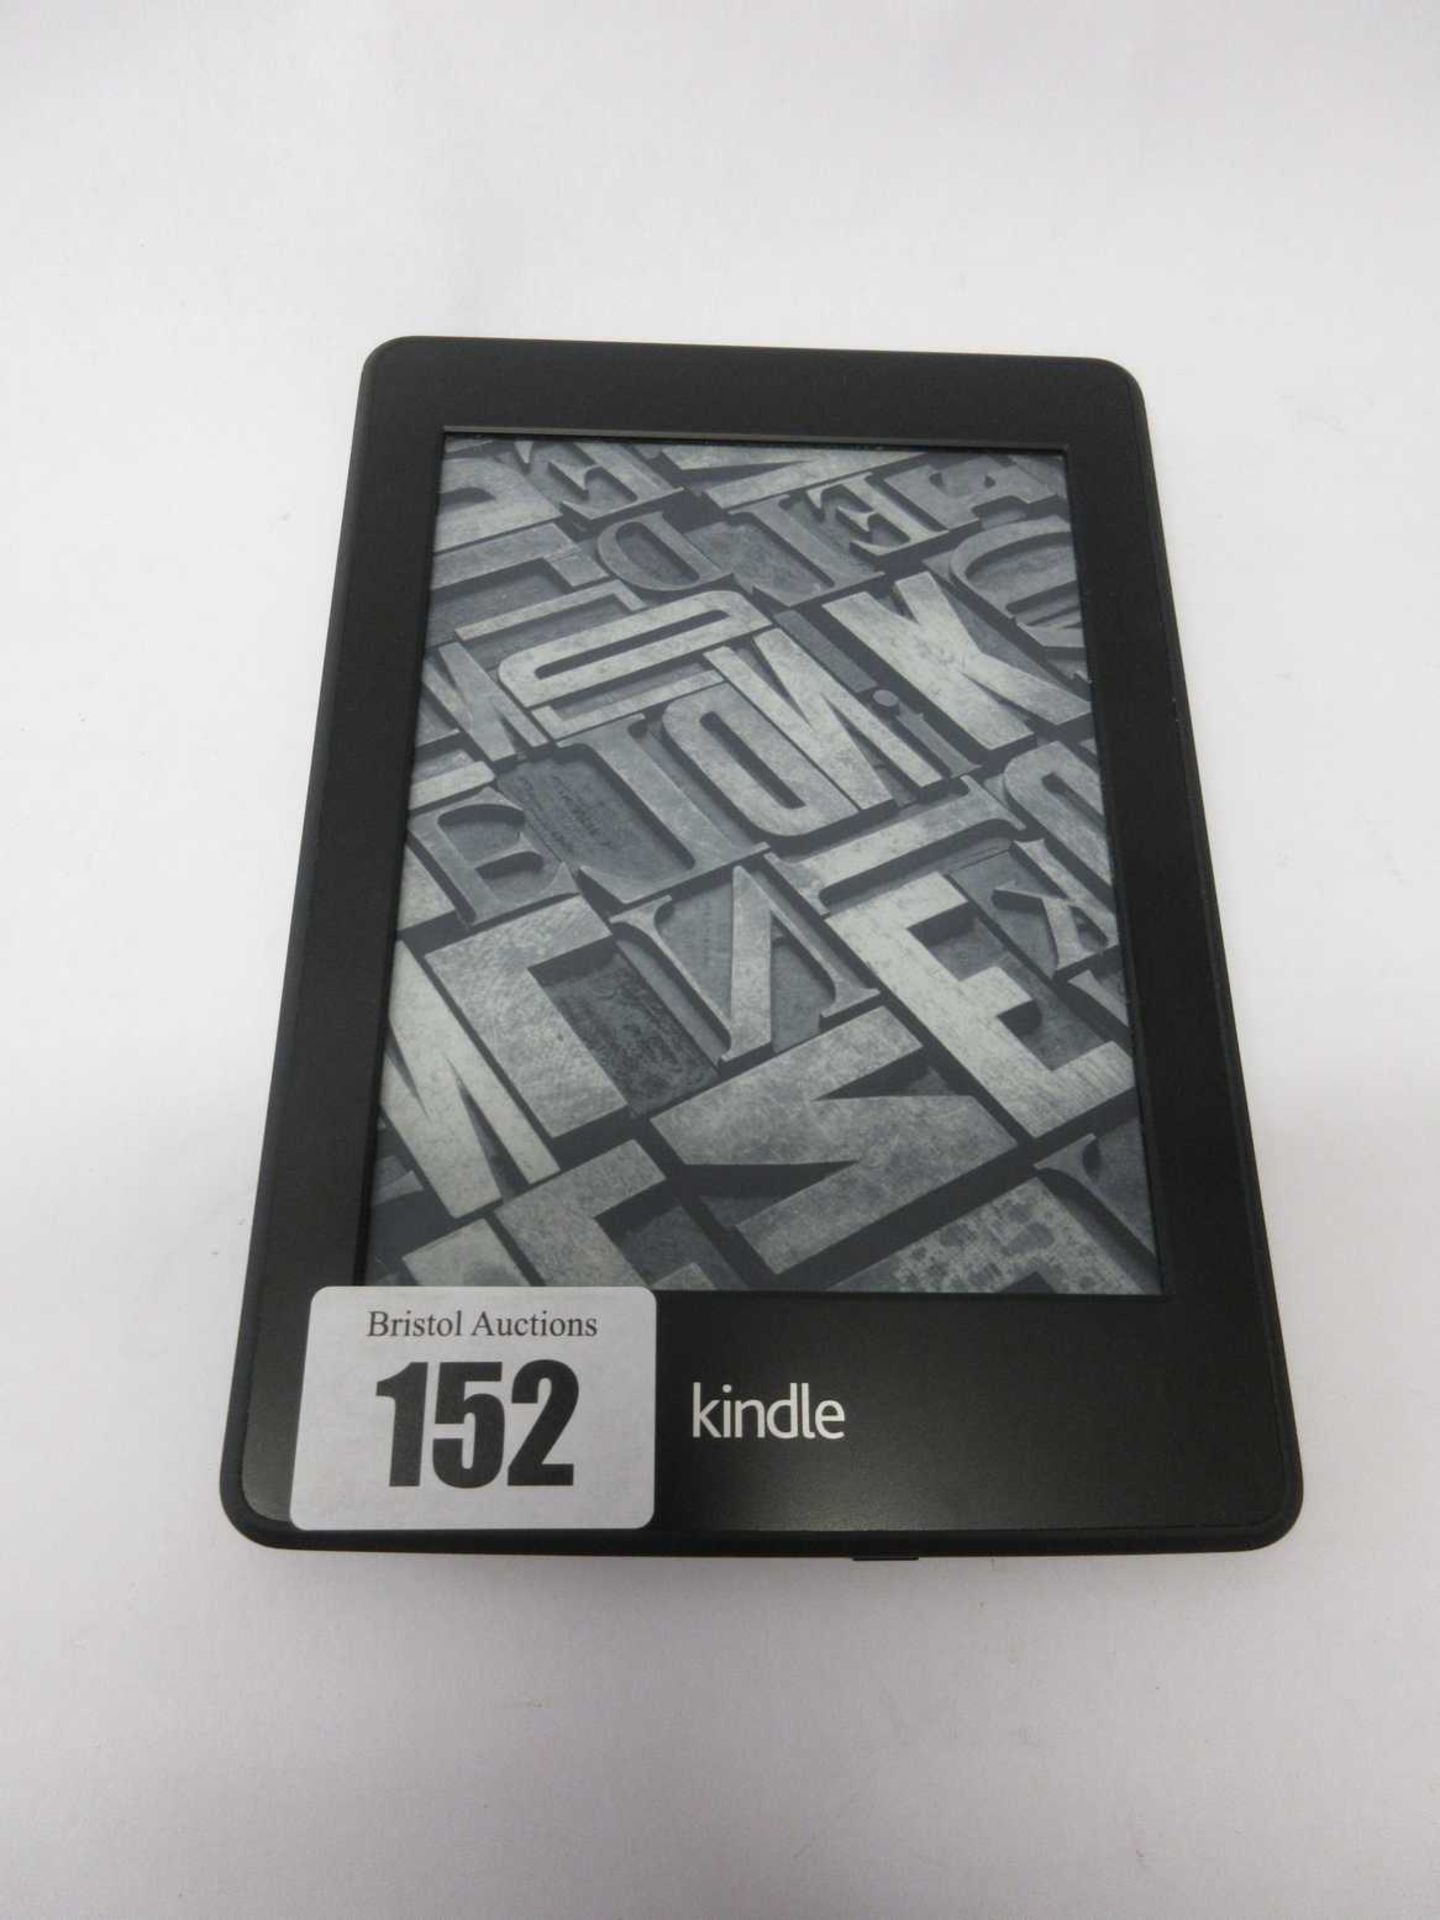 A pre-owned Amazon Kindle Paperwhite (DP75SDI) 6” E-Reader in Black.